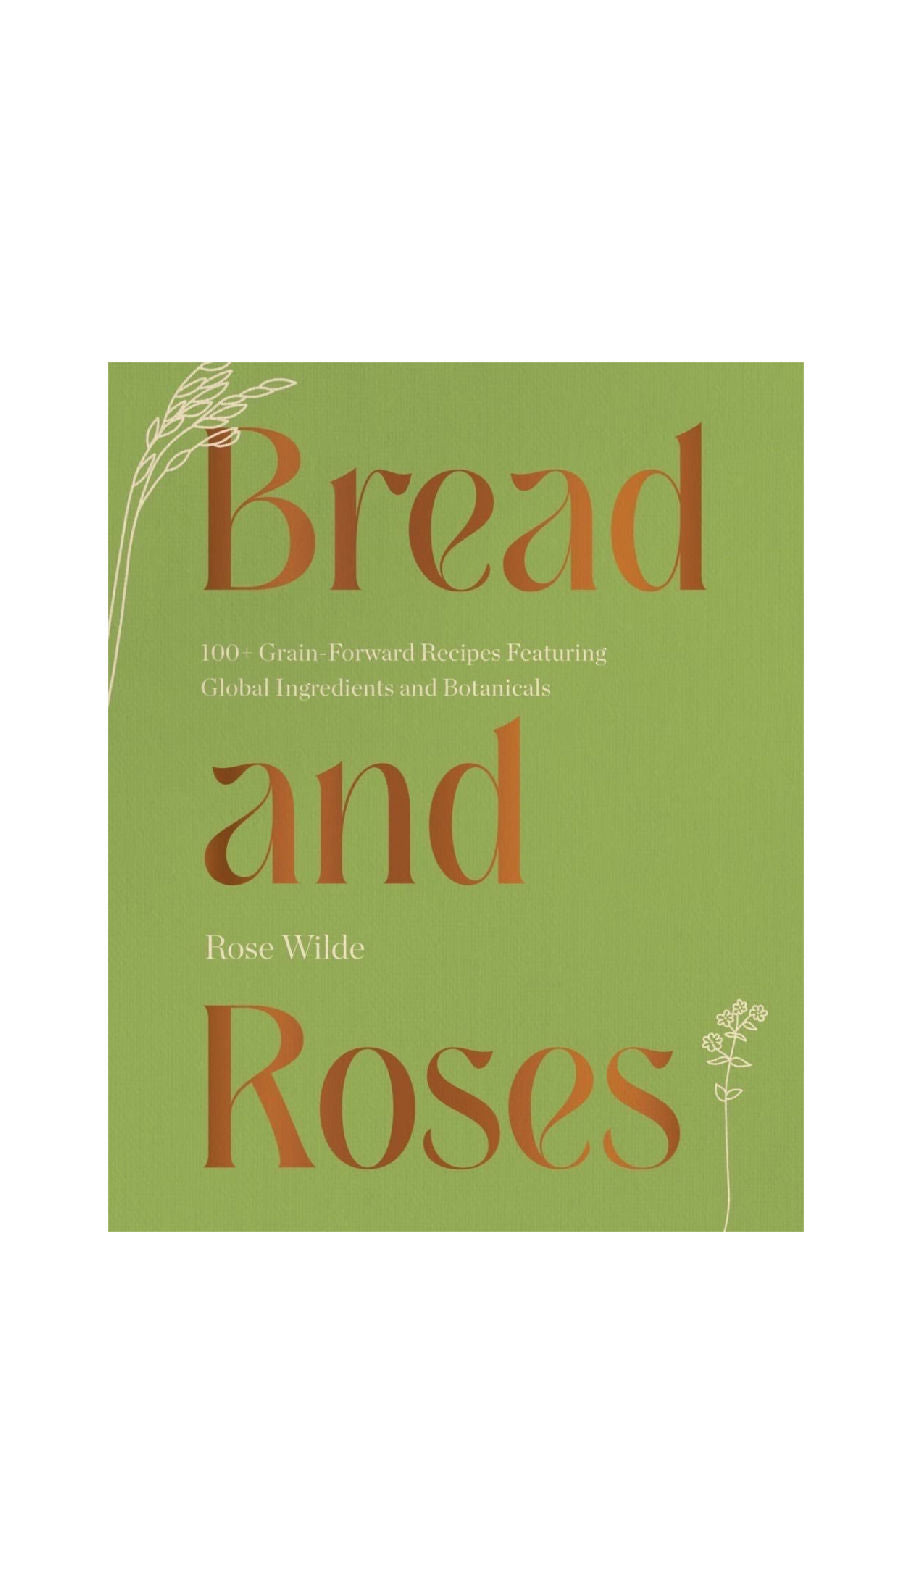 Bread & Roses